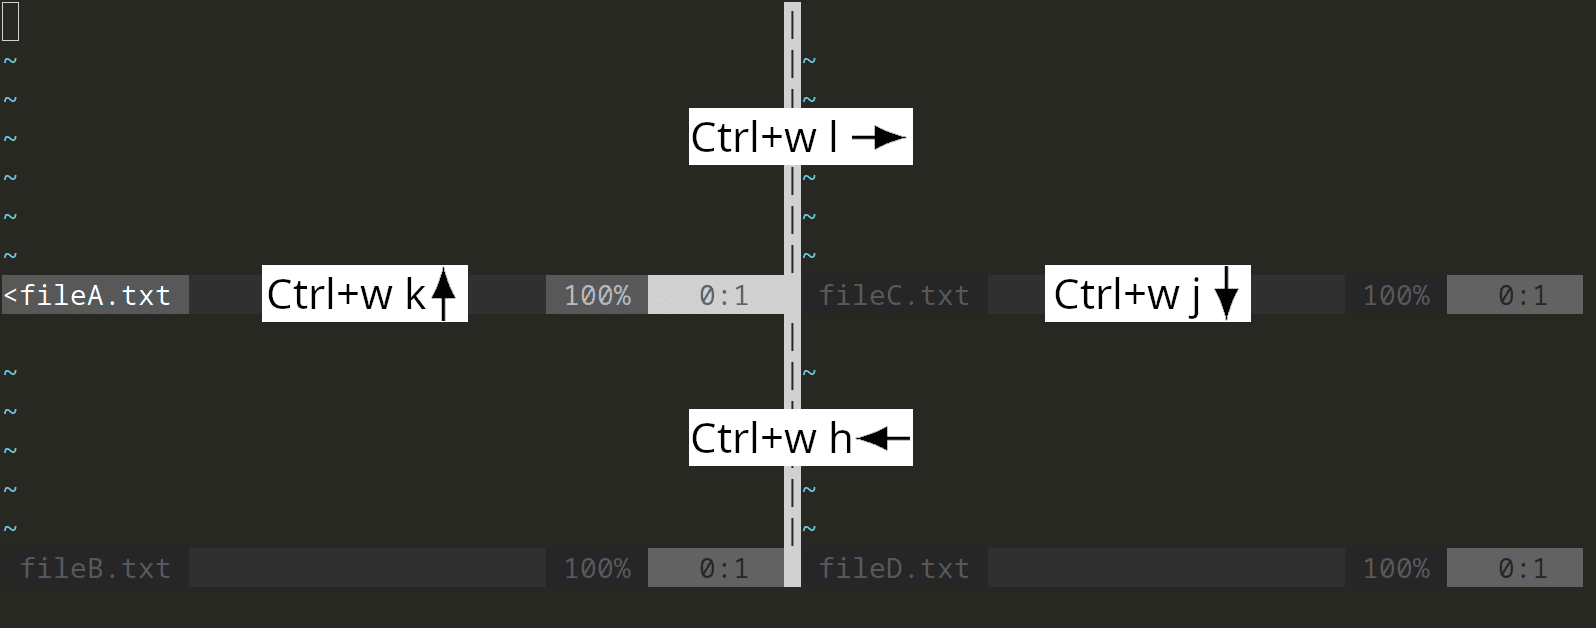 Switching between window splits in vim with Ctrl+w [hjkl]